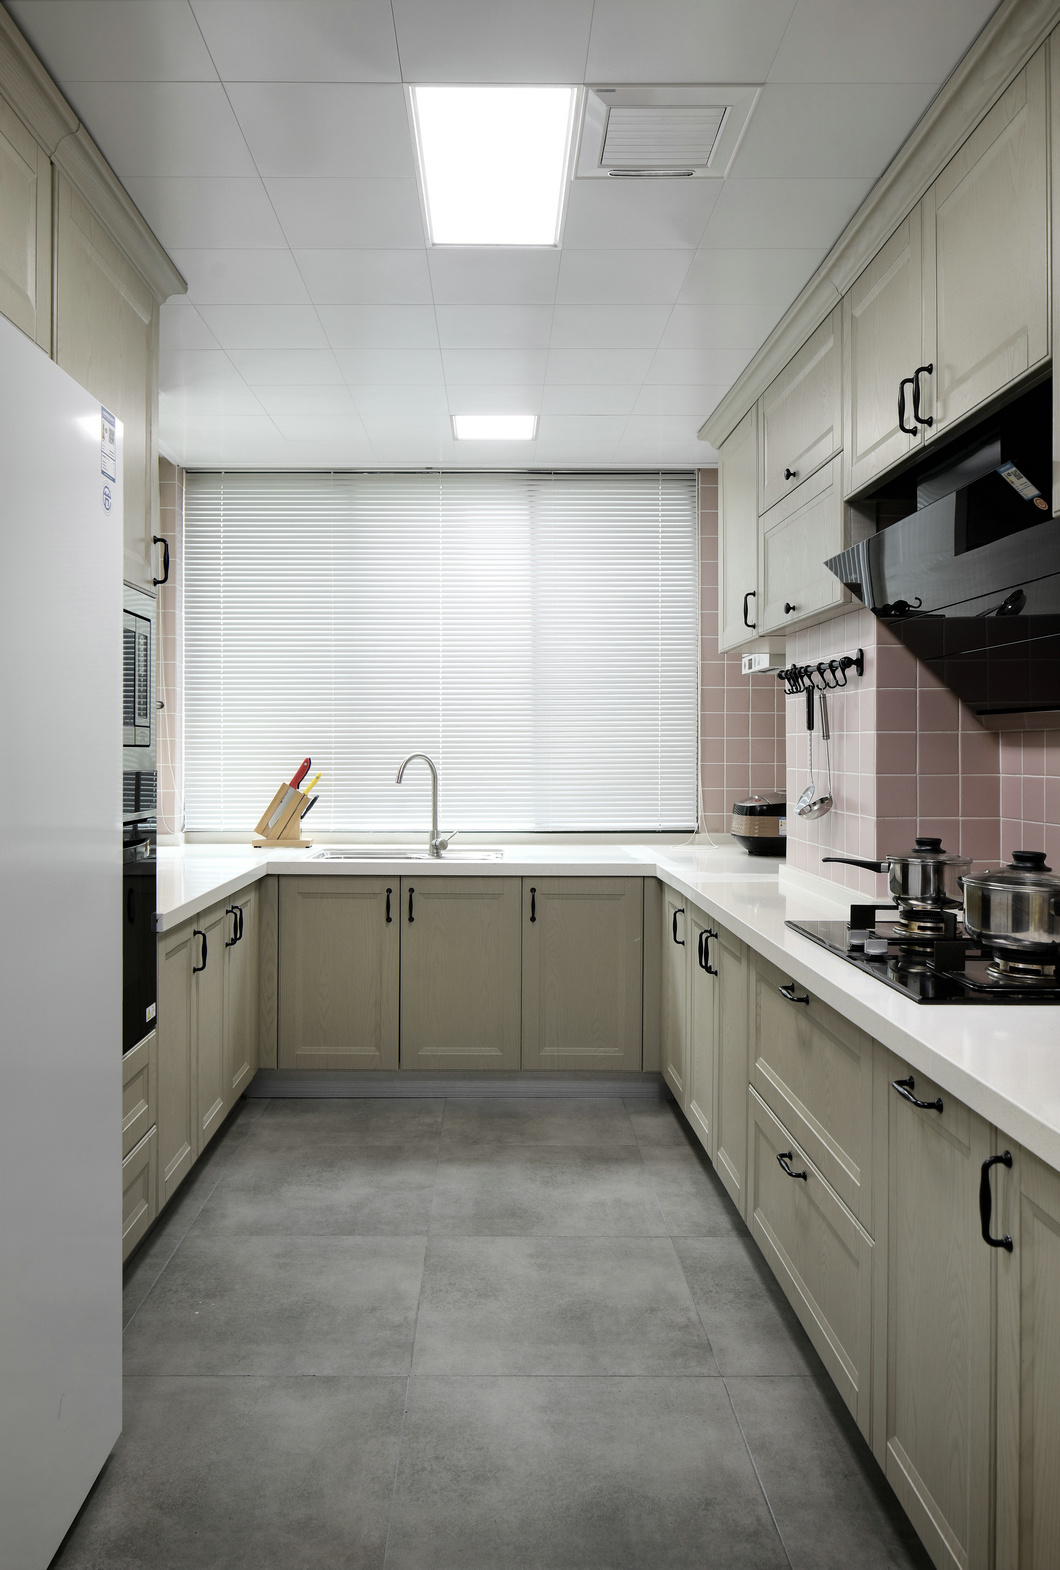 U型厨房设计，浅色橱柜温润雅致，储物空间能力强，空间完整又美观。